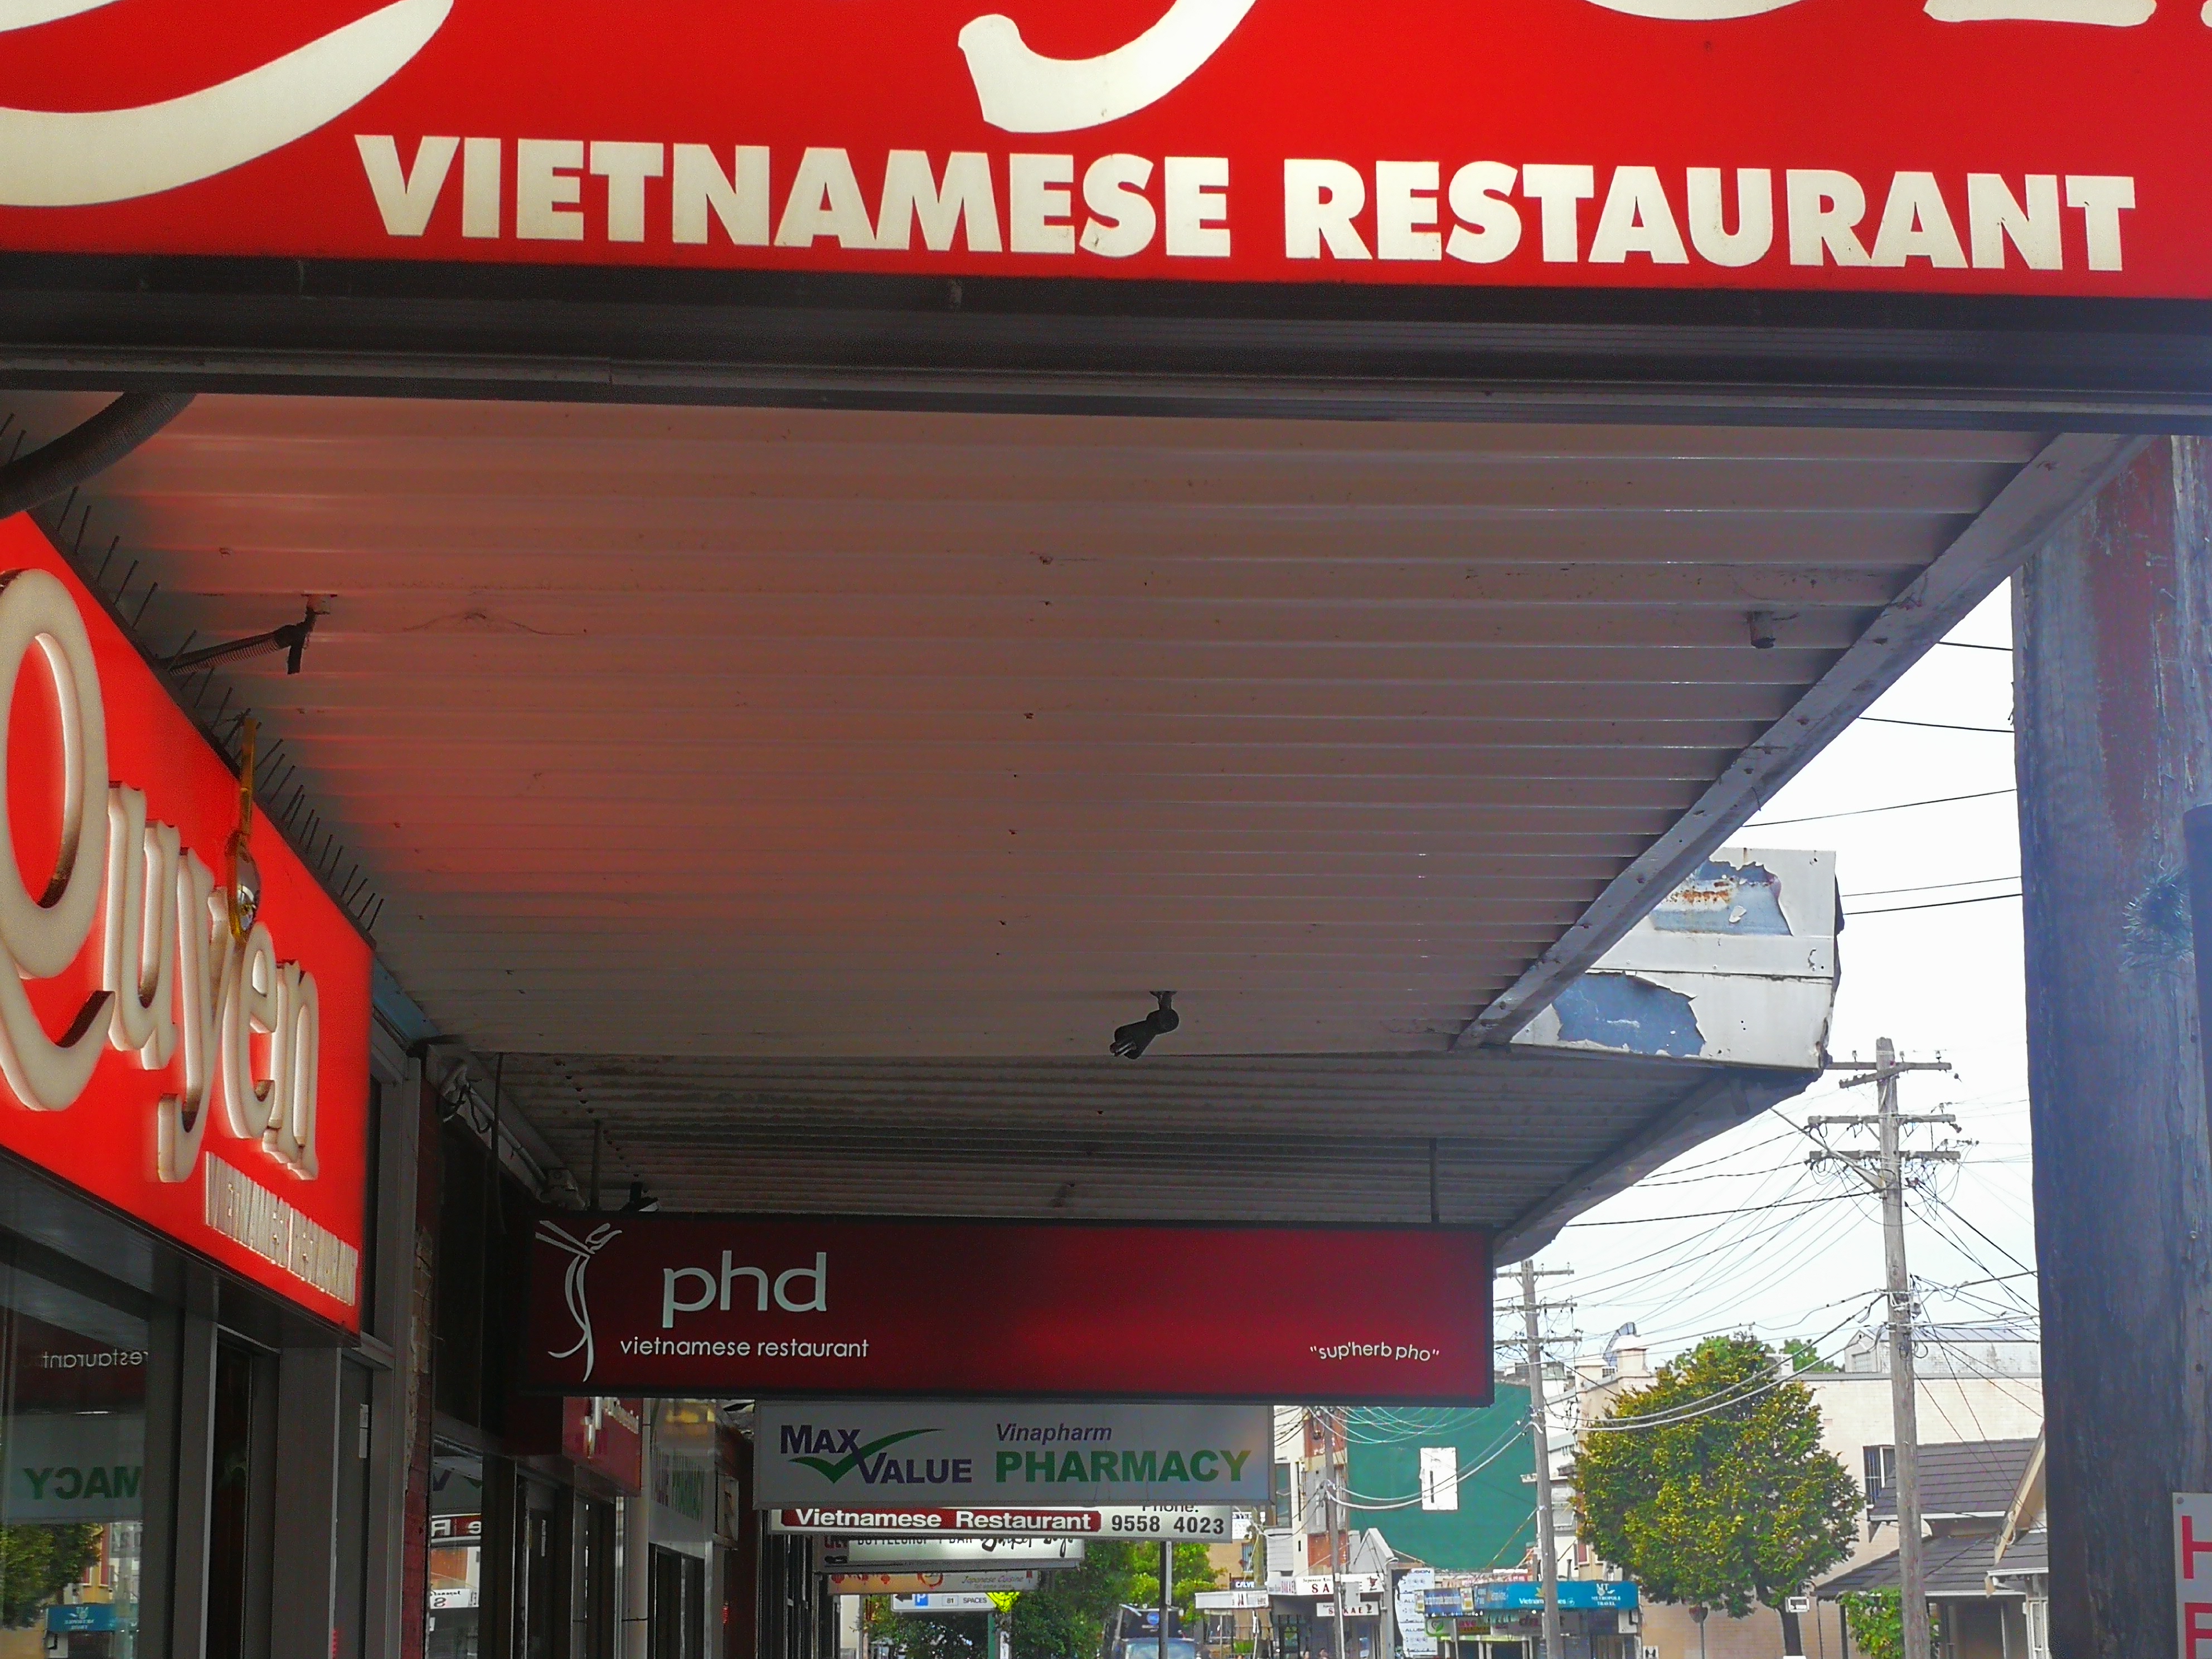 Little Vietnam on Illawarra rd, featuring plenty of Vietnamese restaurants. Image: Christopher Kelly